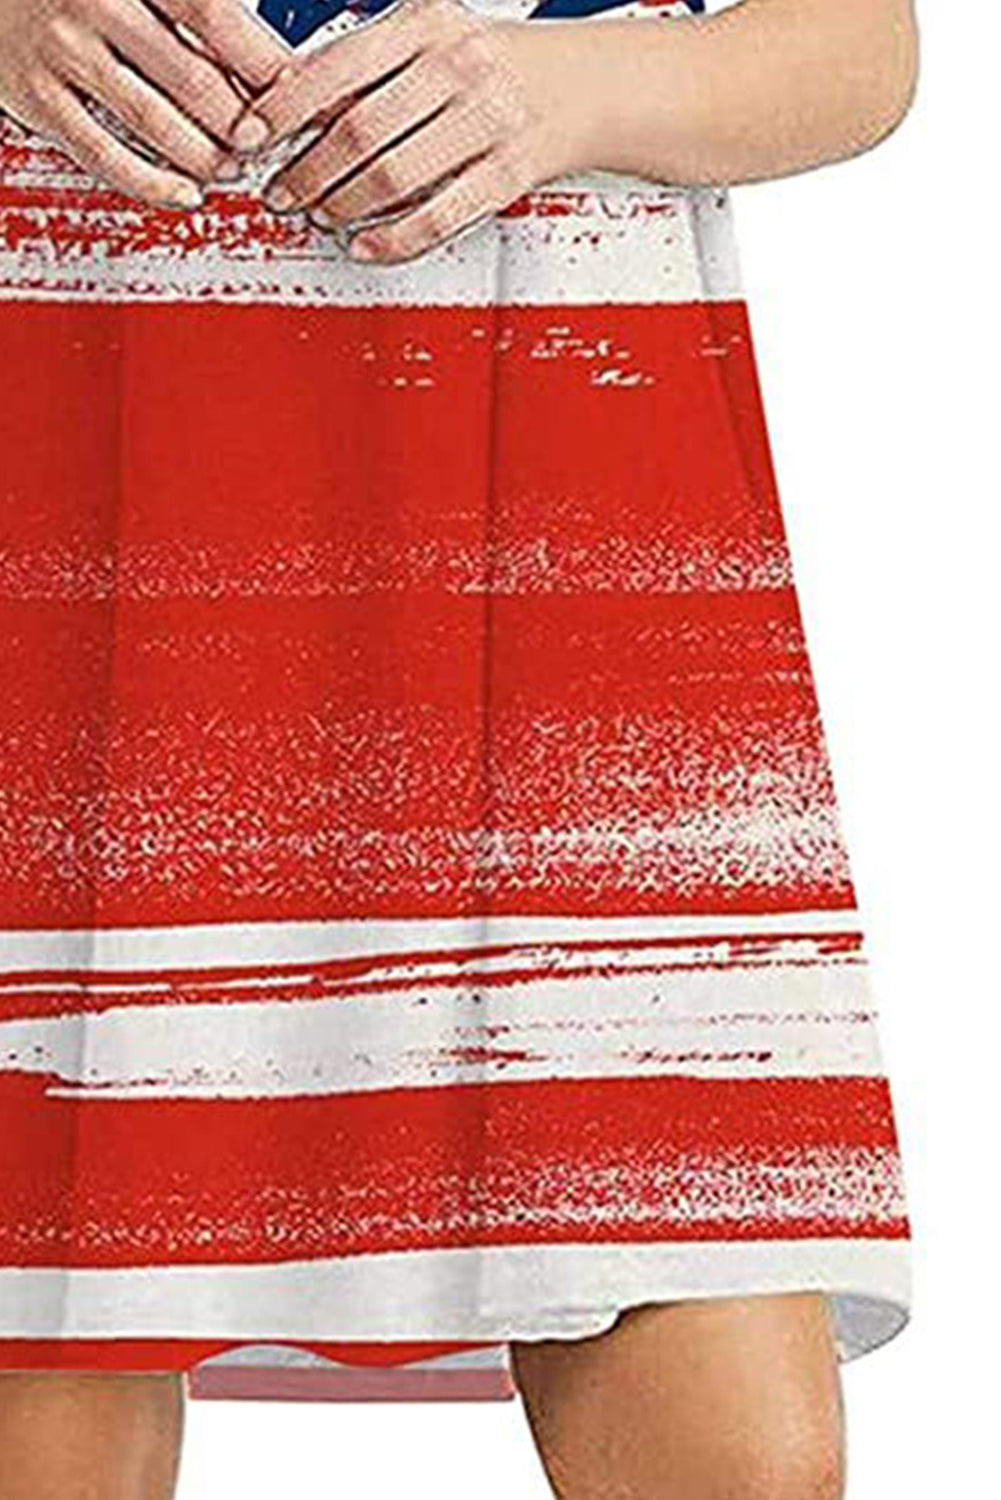 Multicolor Women's Dresses Flag Print Mini Dress LC229095-1022